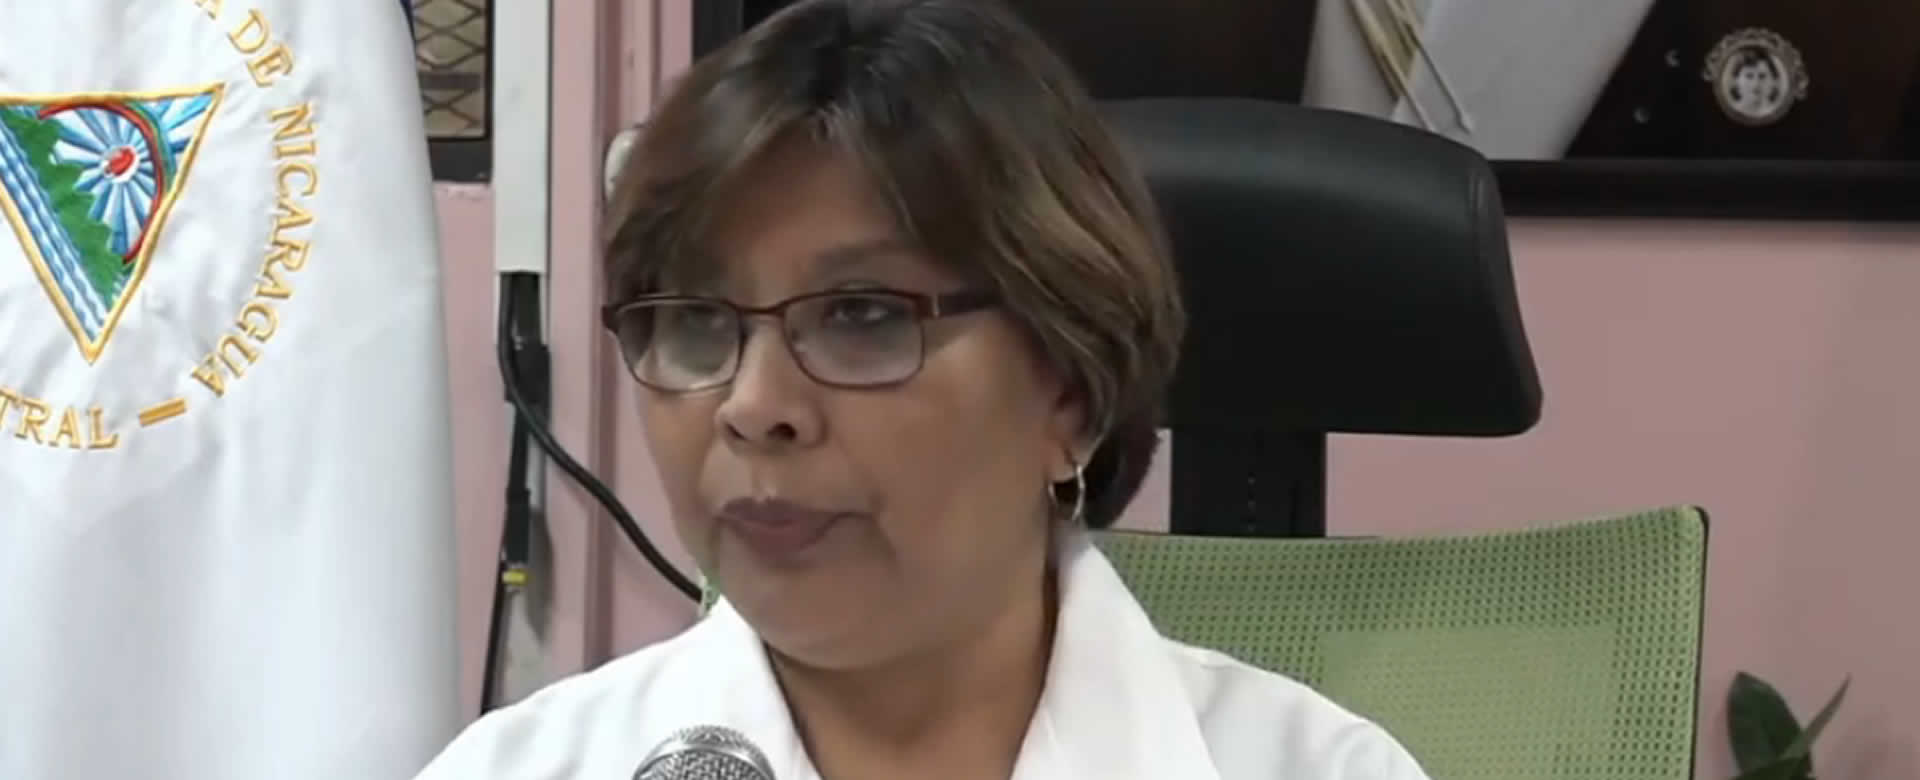 Doctora Martha Reyes, Ministra de Salud de Nicaragua.